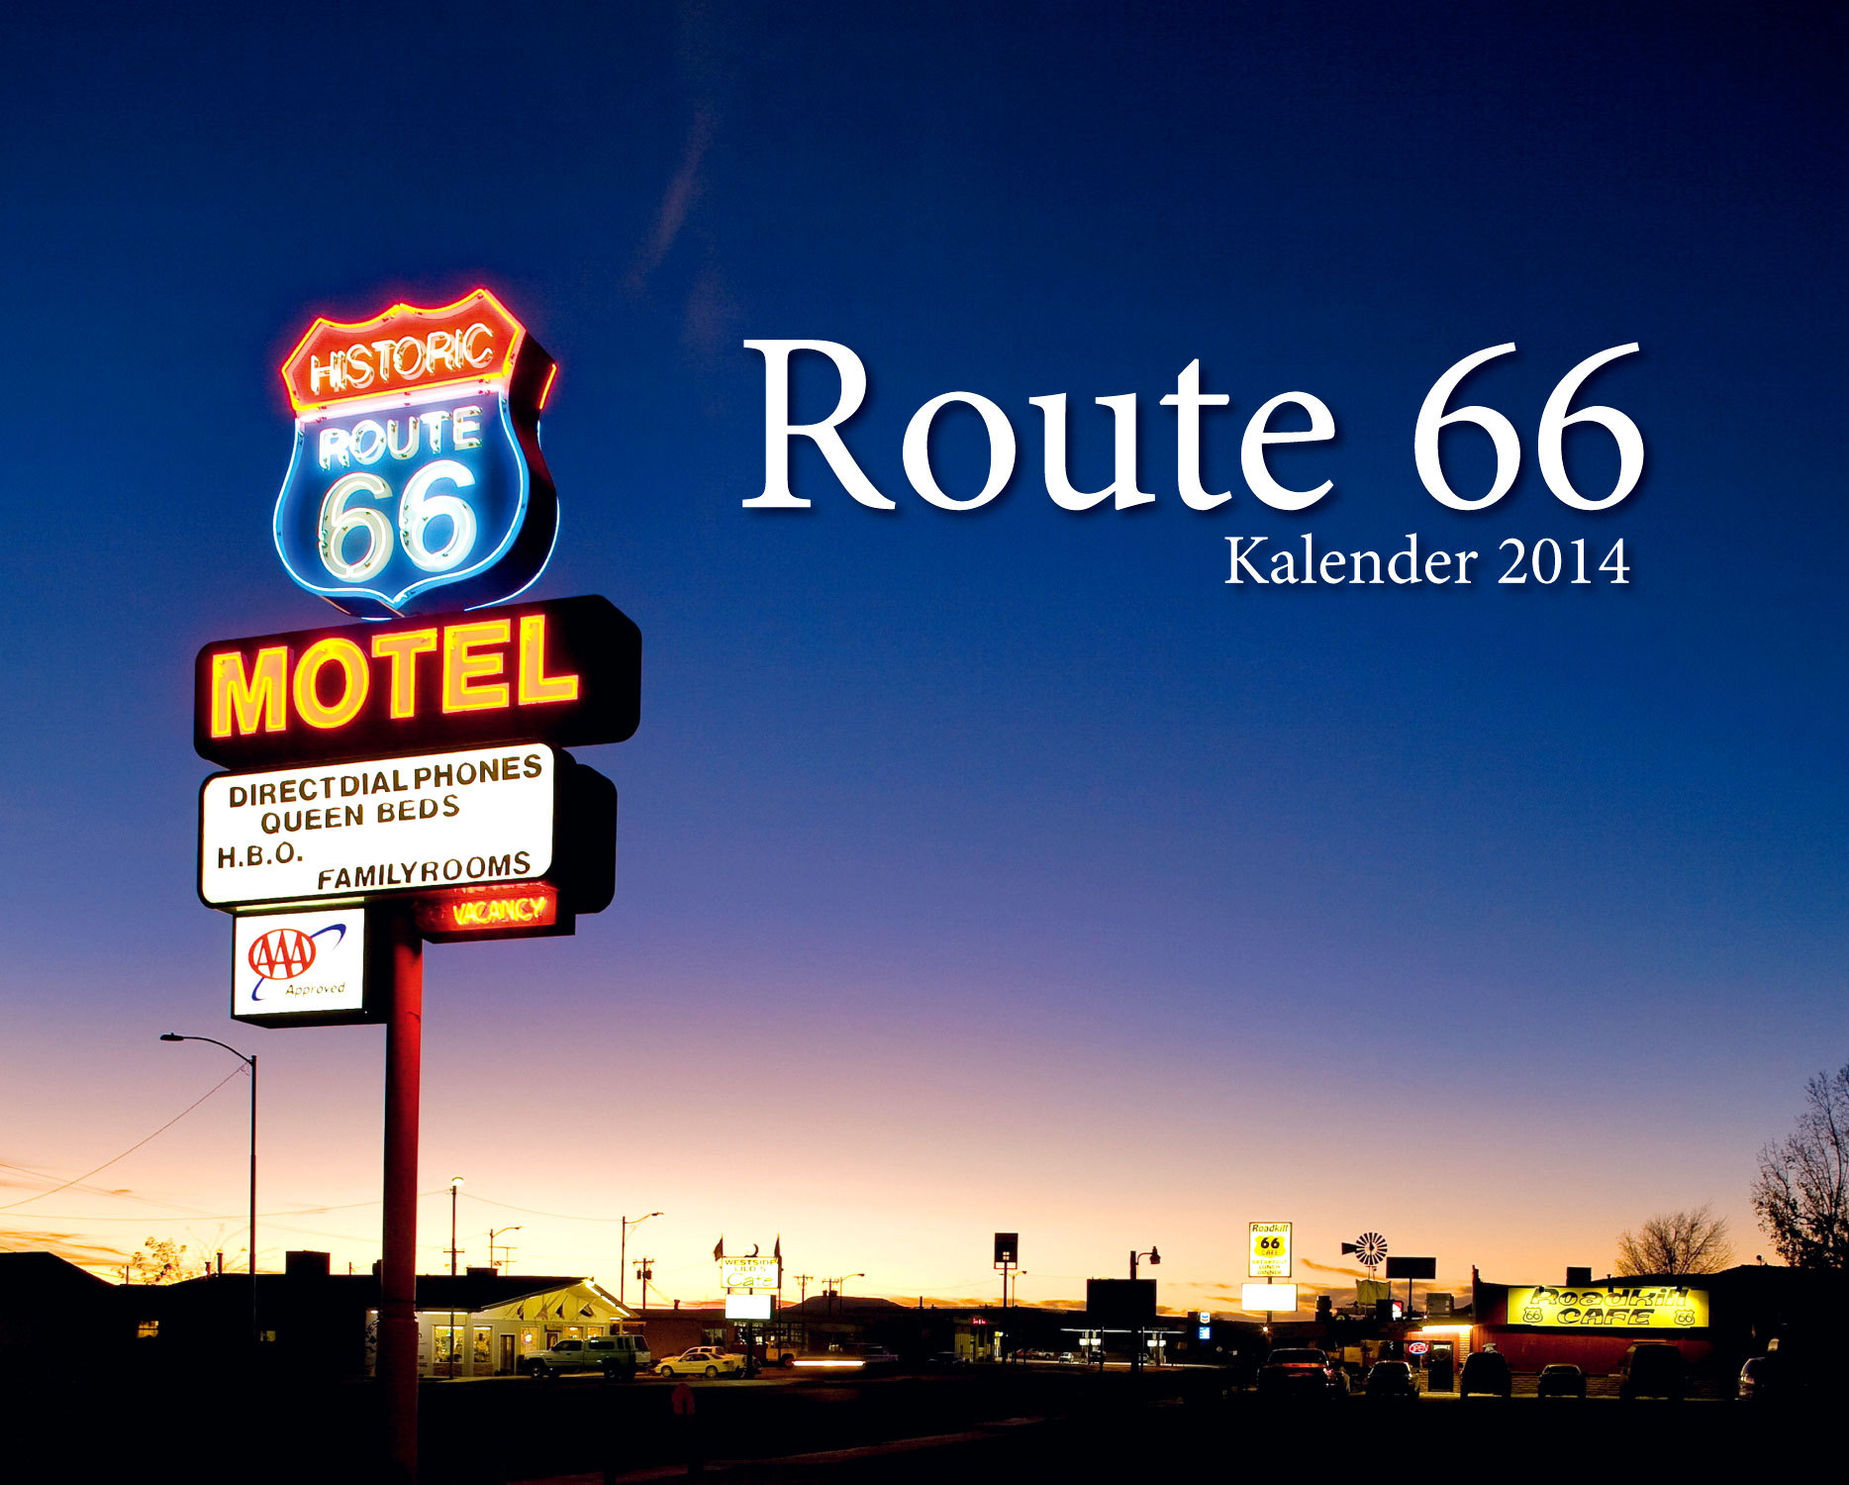 Kalender Route 66 2014, plus 2 Blechschilder - Kalender bestellen